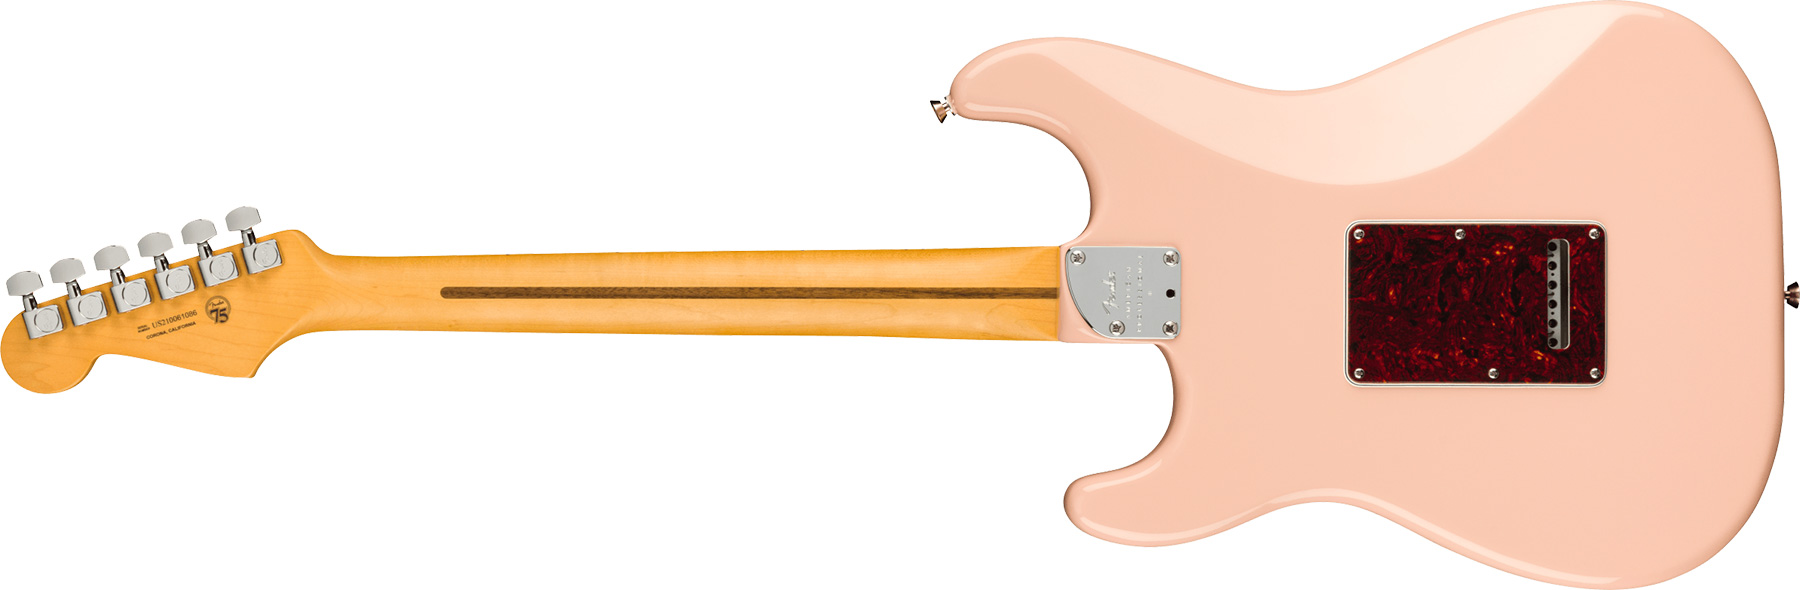 Fender Strat American Pro Ii Ltd Hss Trem Mn - Shell Pink - Str shape electric guitar - Variation 1